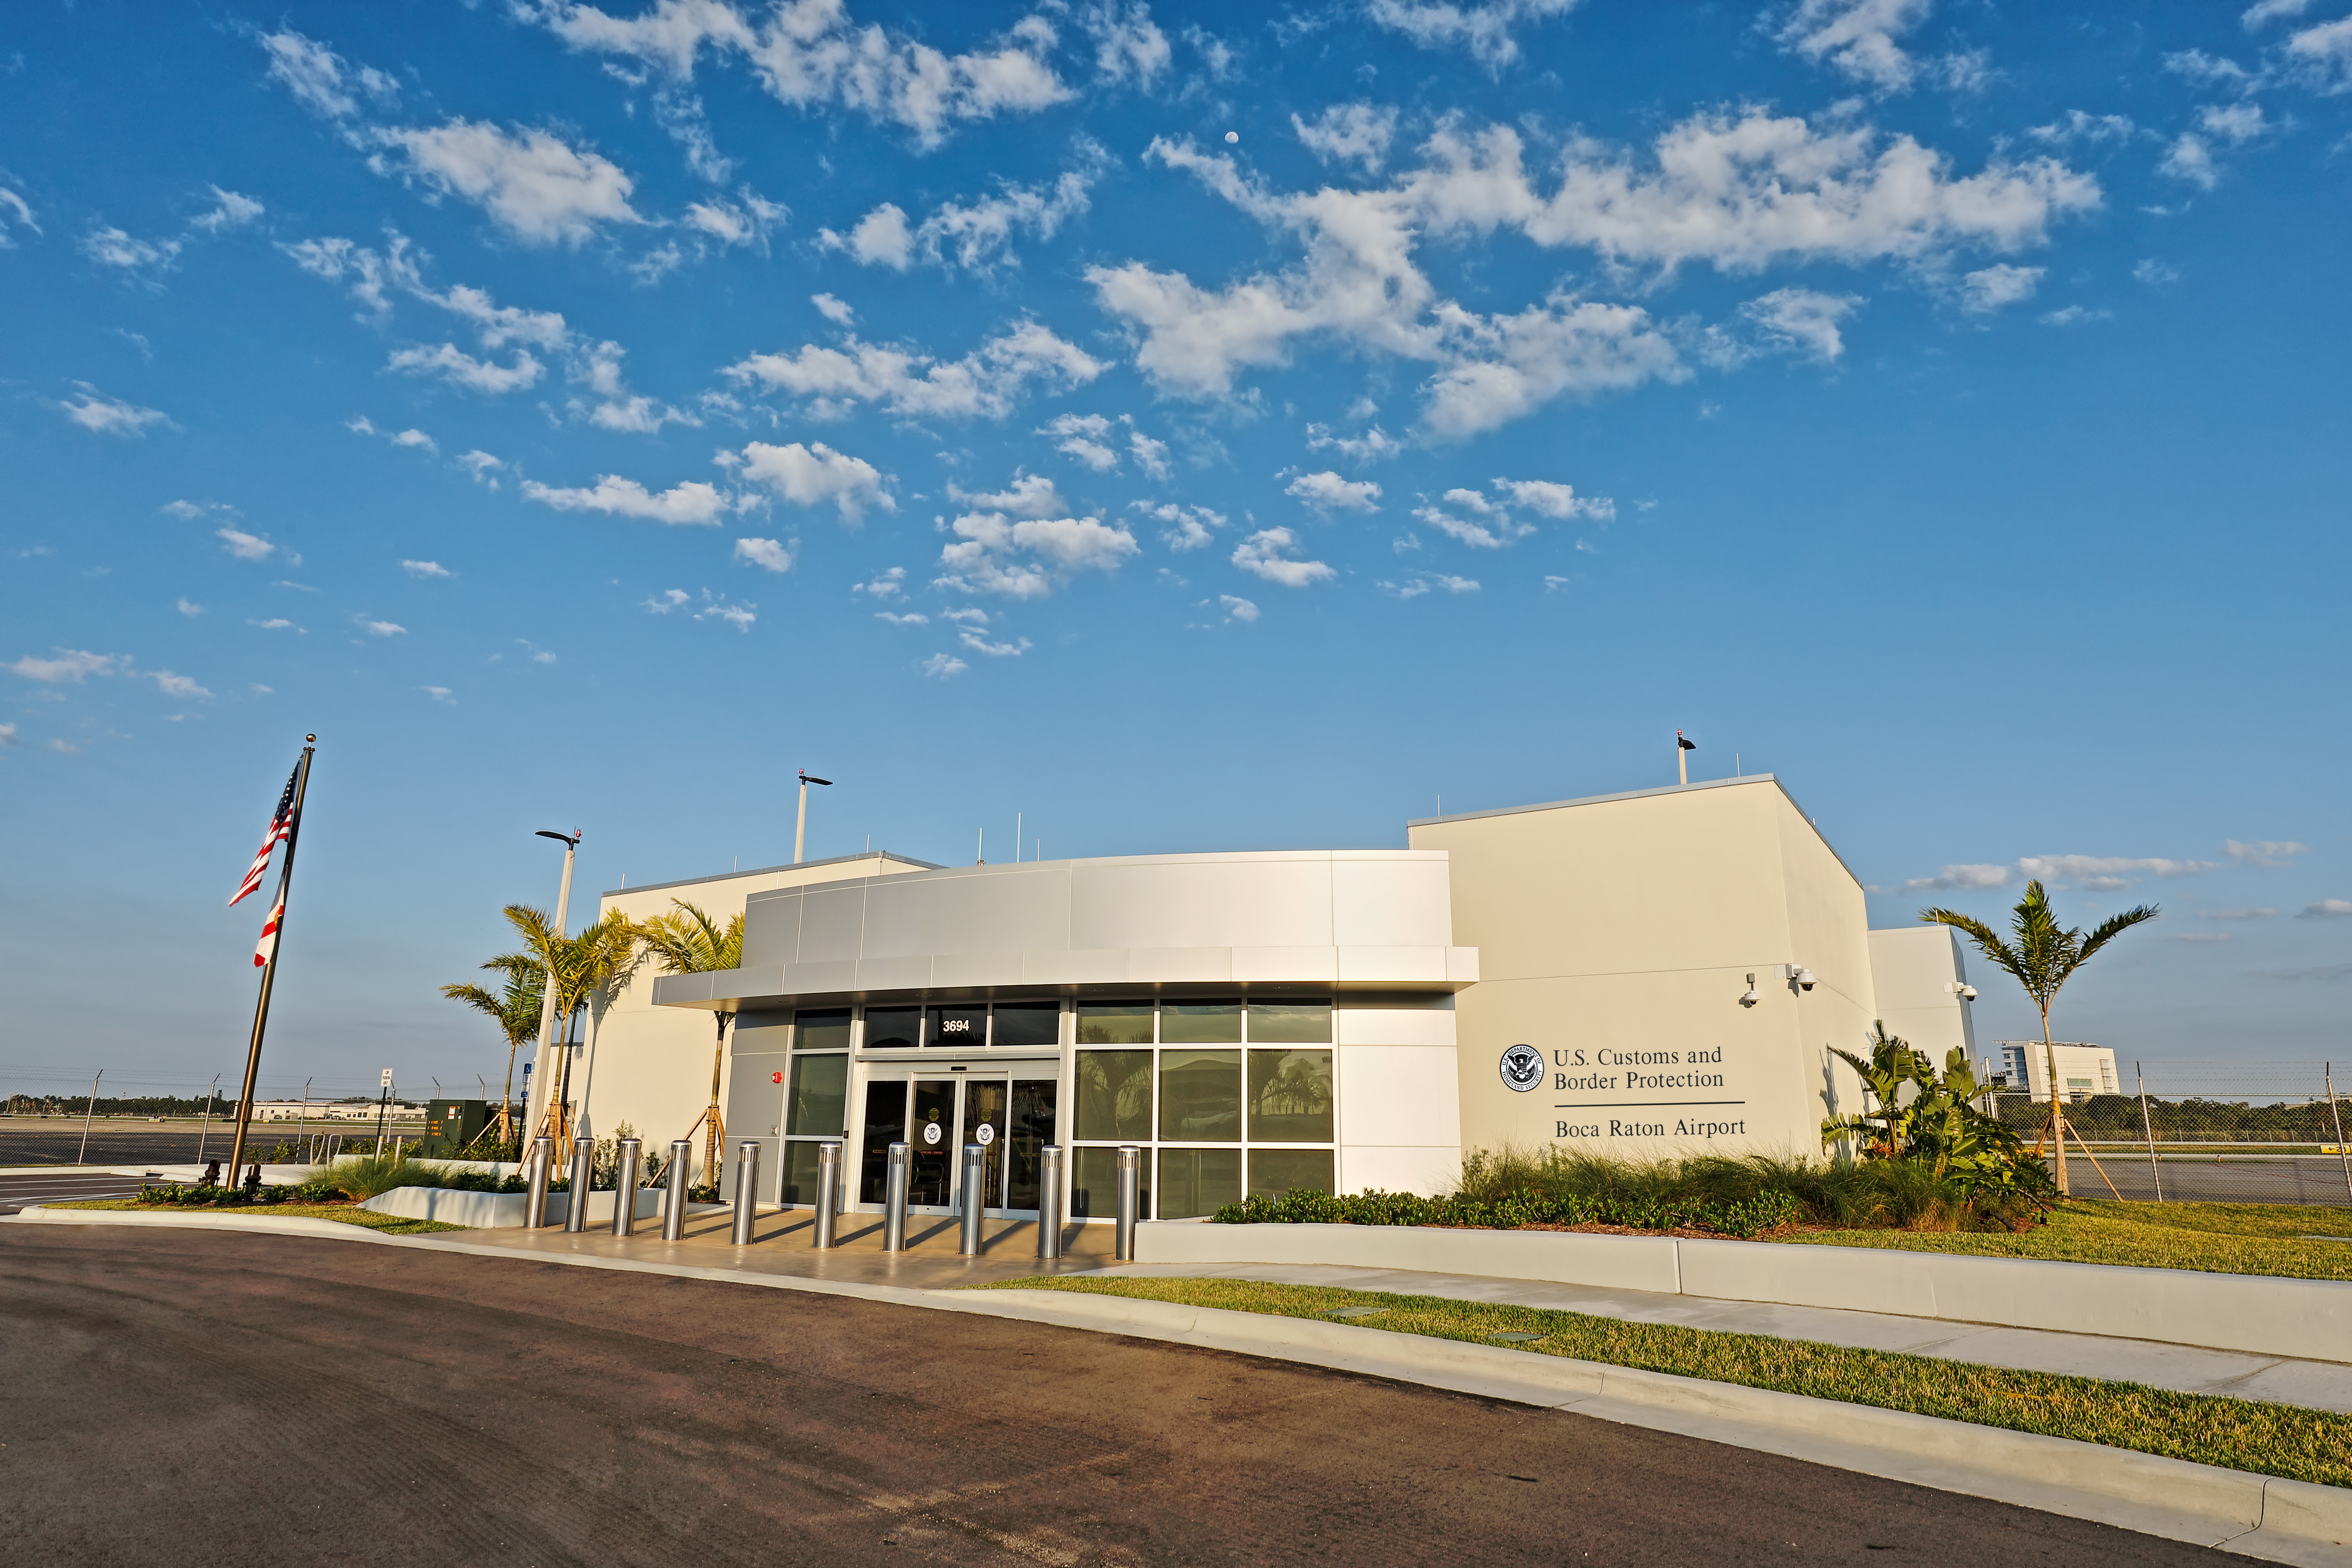 Boca Raton Airport customs facility